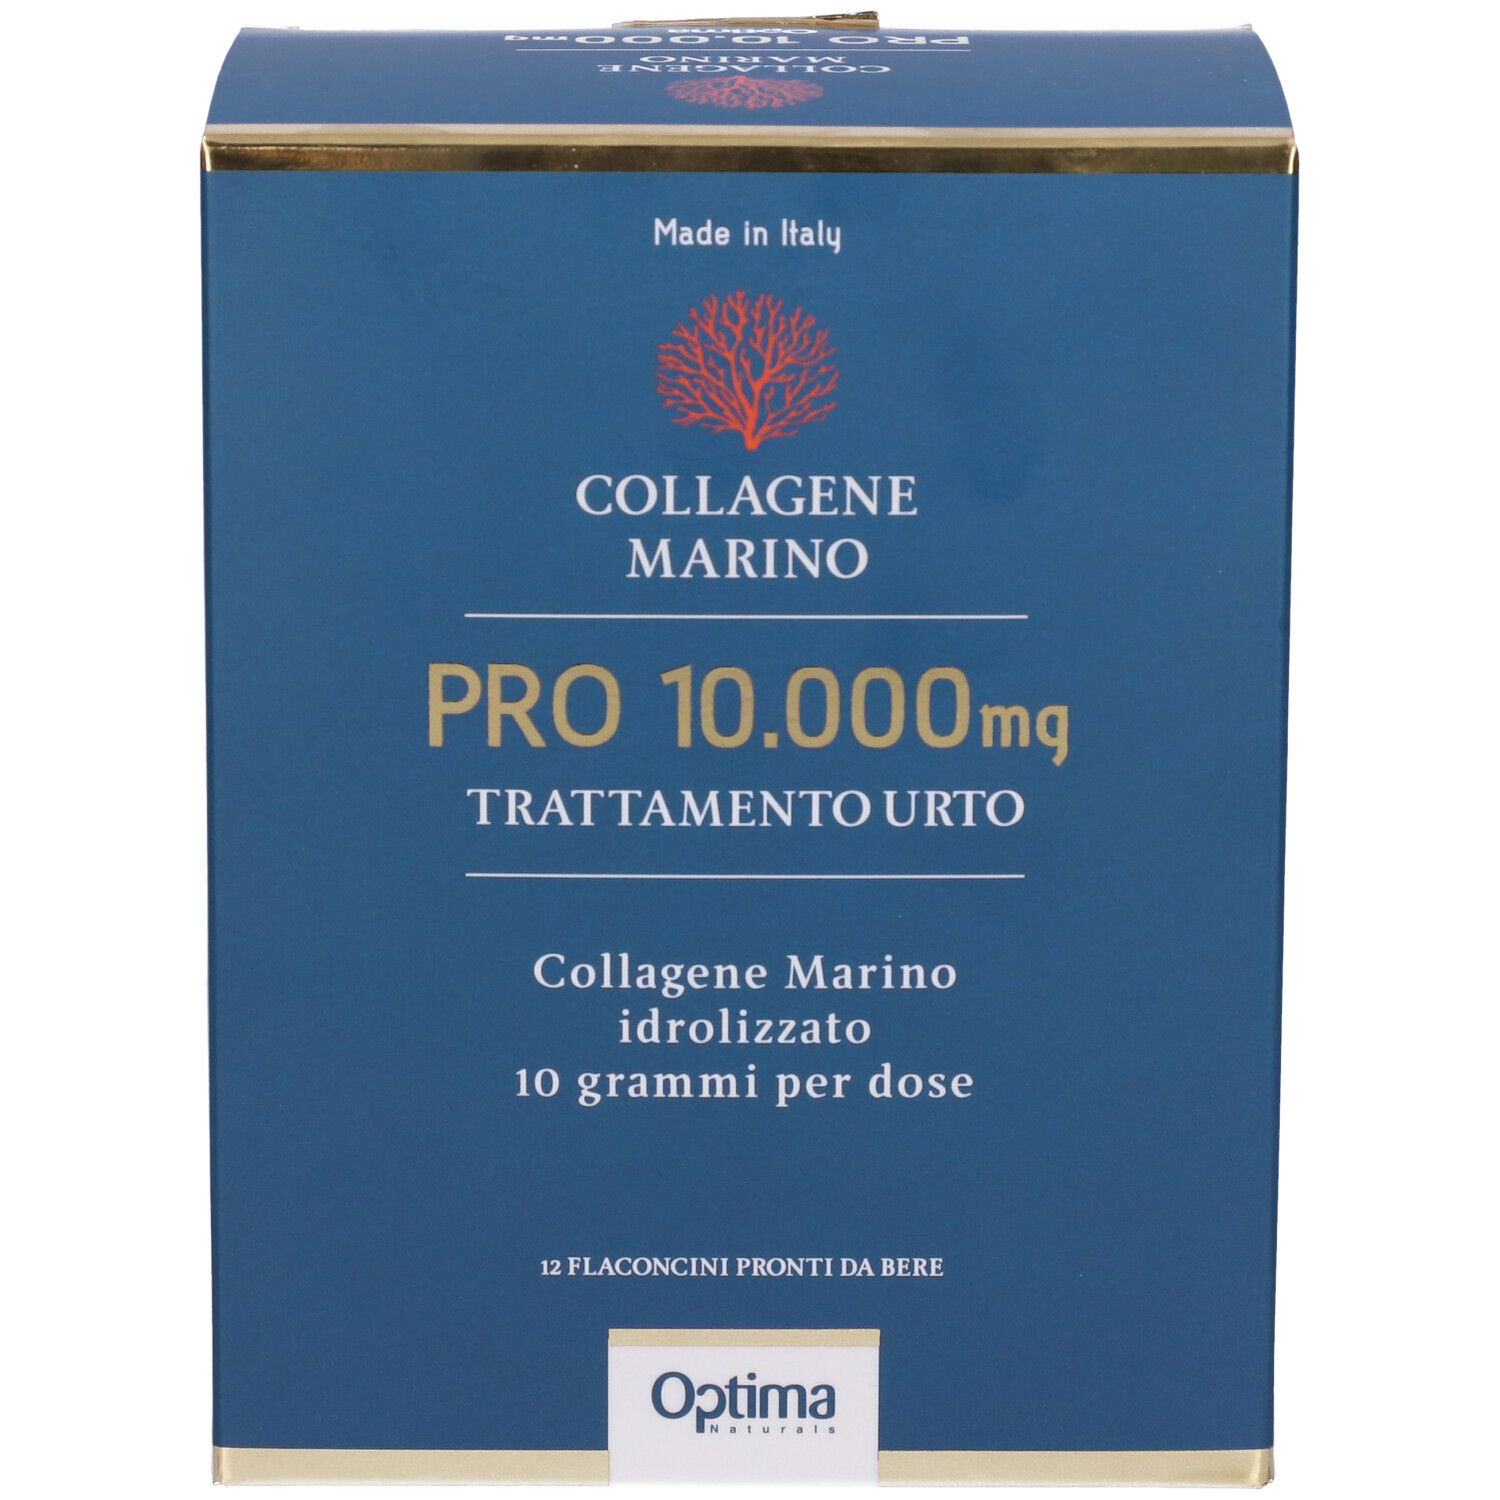 Collagene Marino Pro 10.000 mg Trattamento Urto